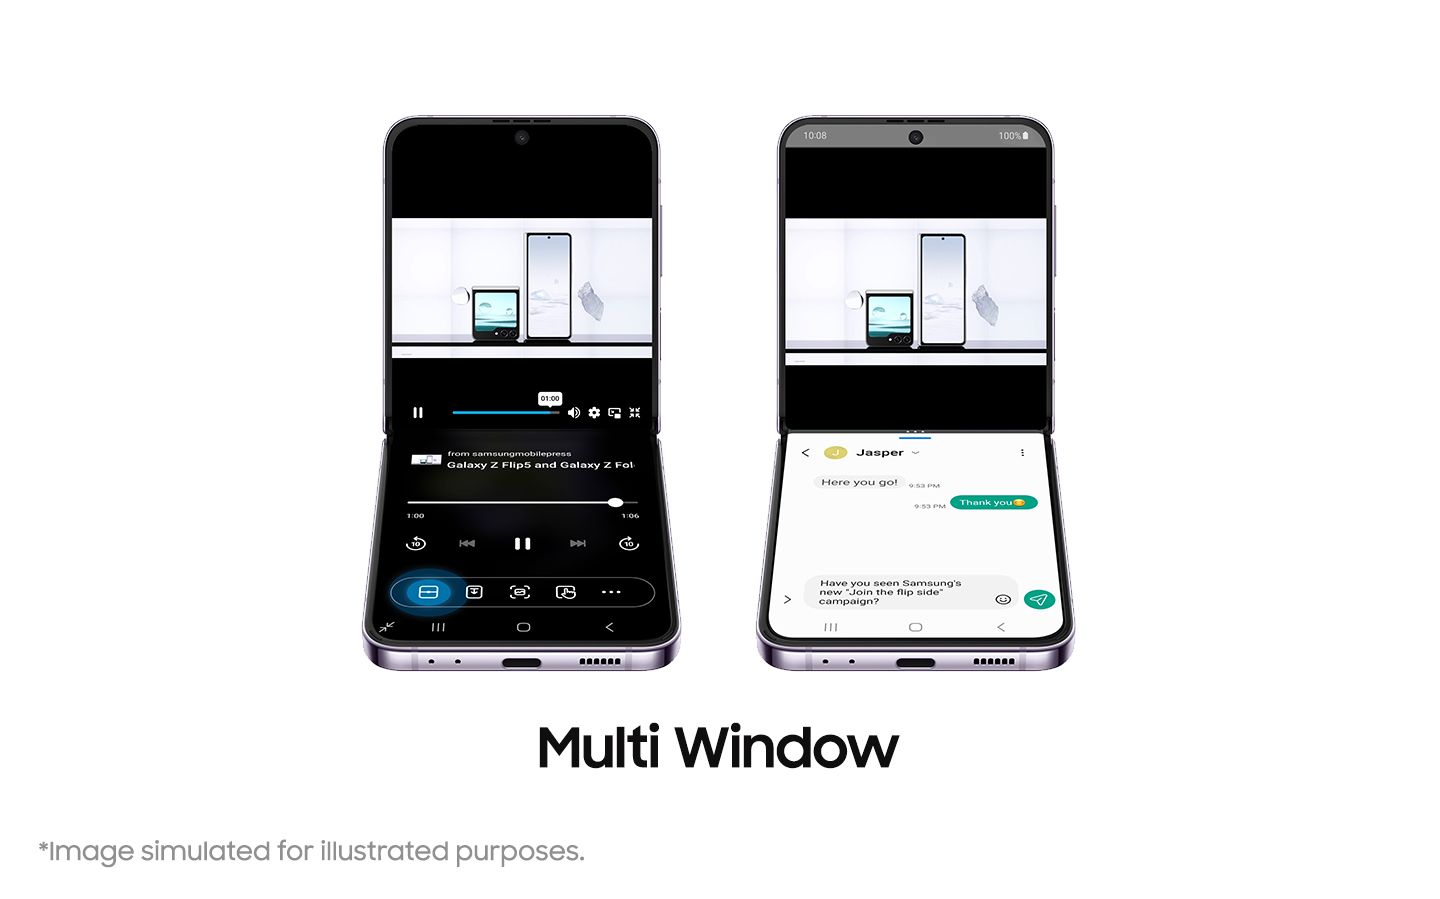 Samsung Galaxy Z Flip multi-window mode